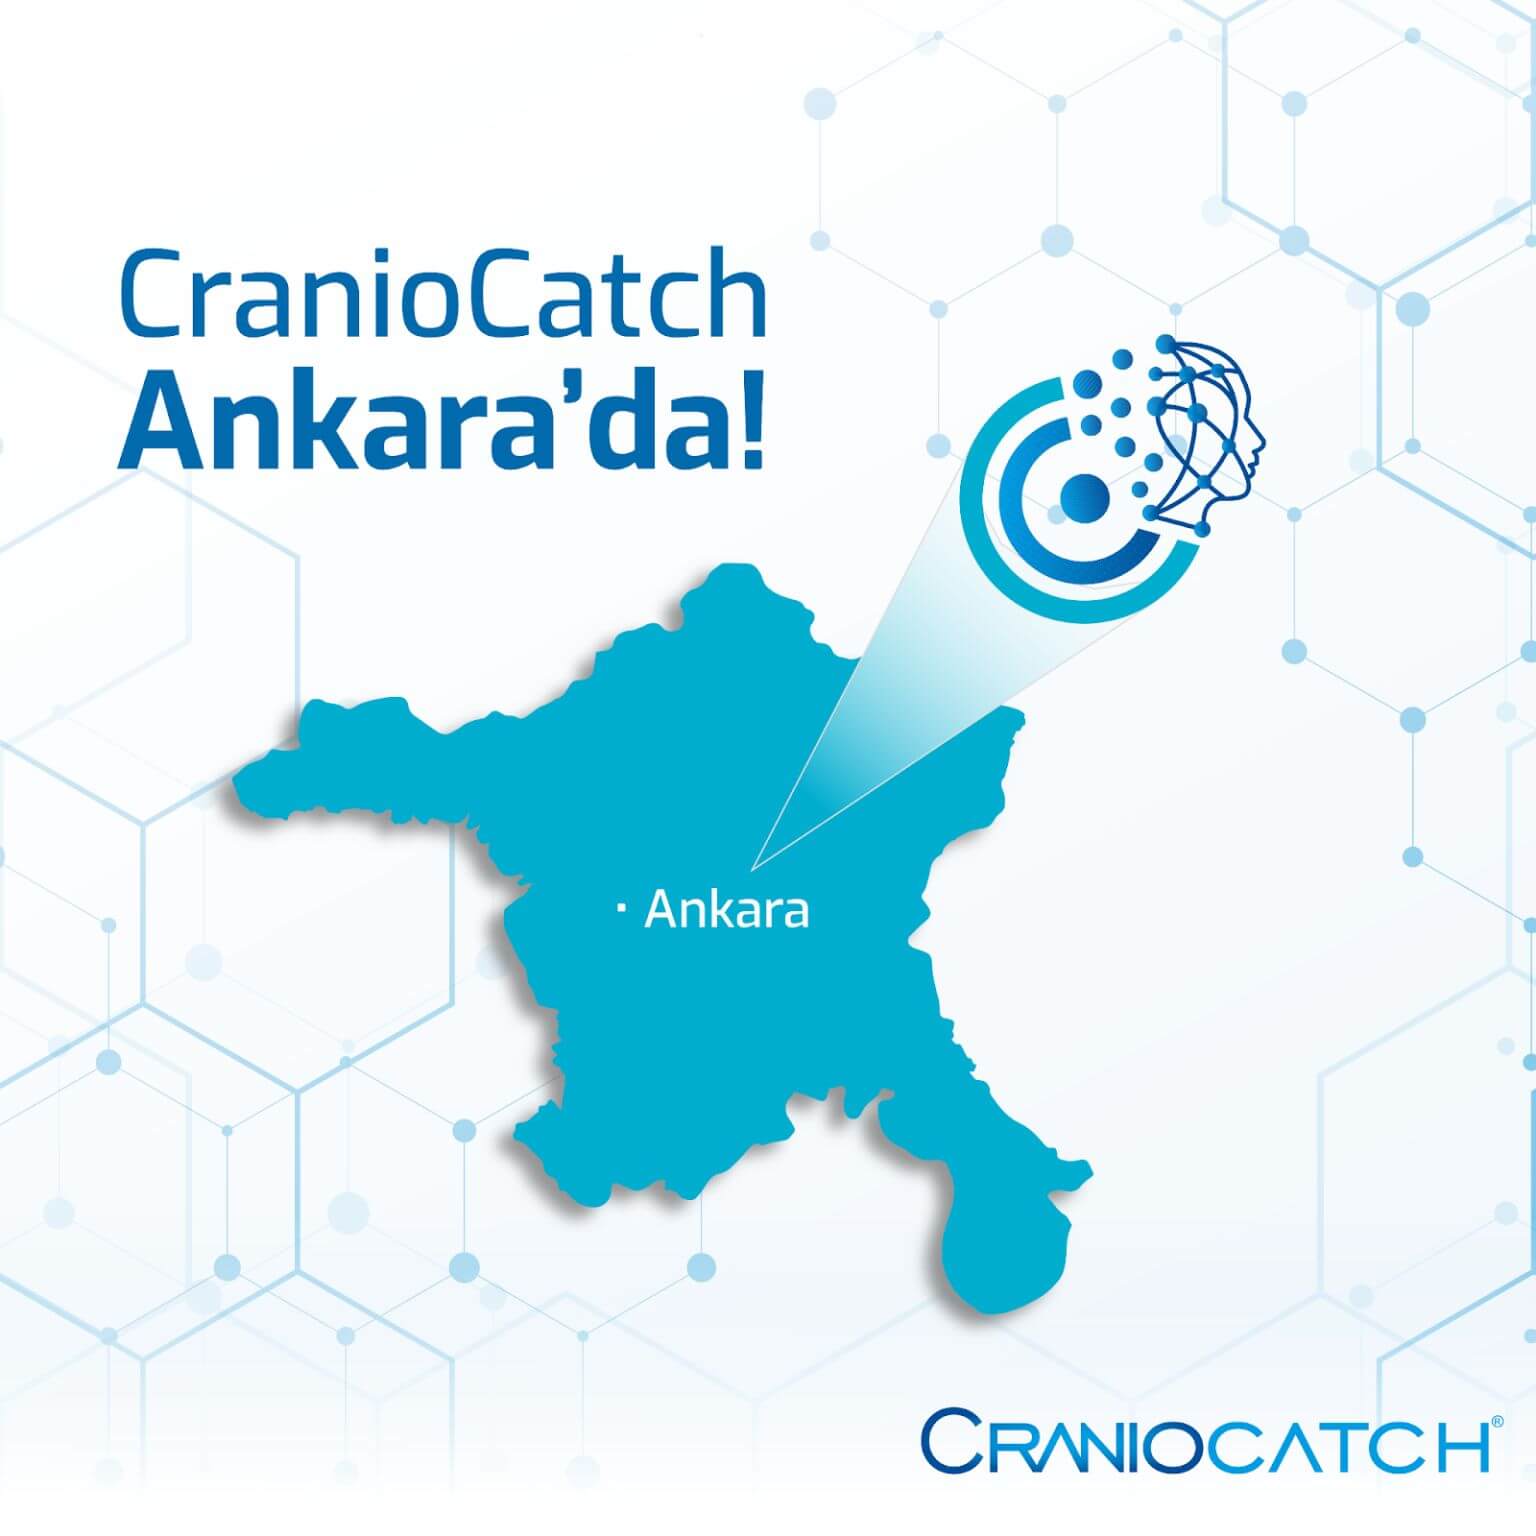 CranioCatch is in Ankara...